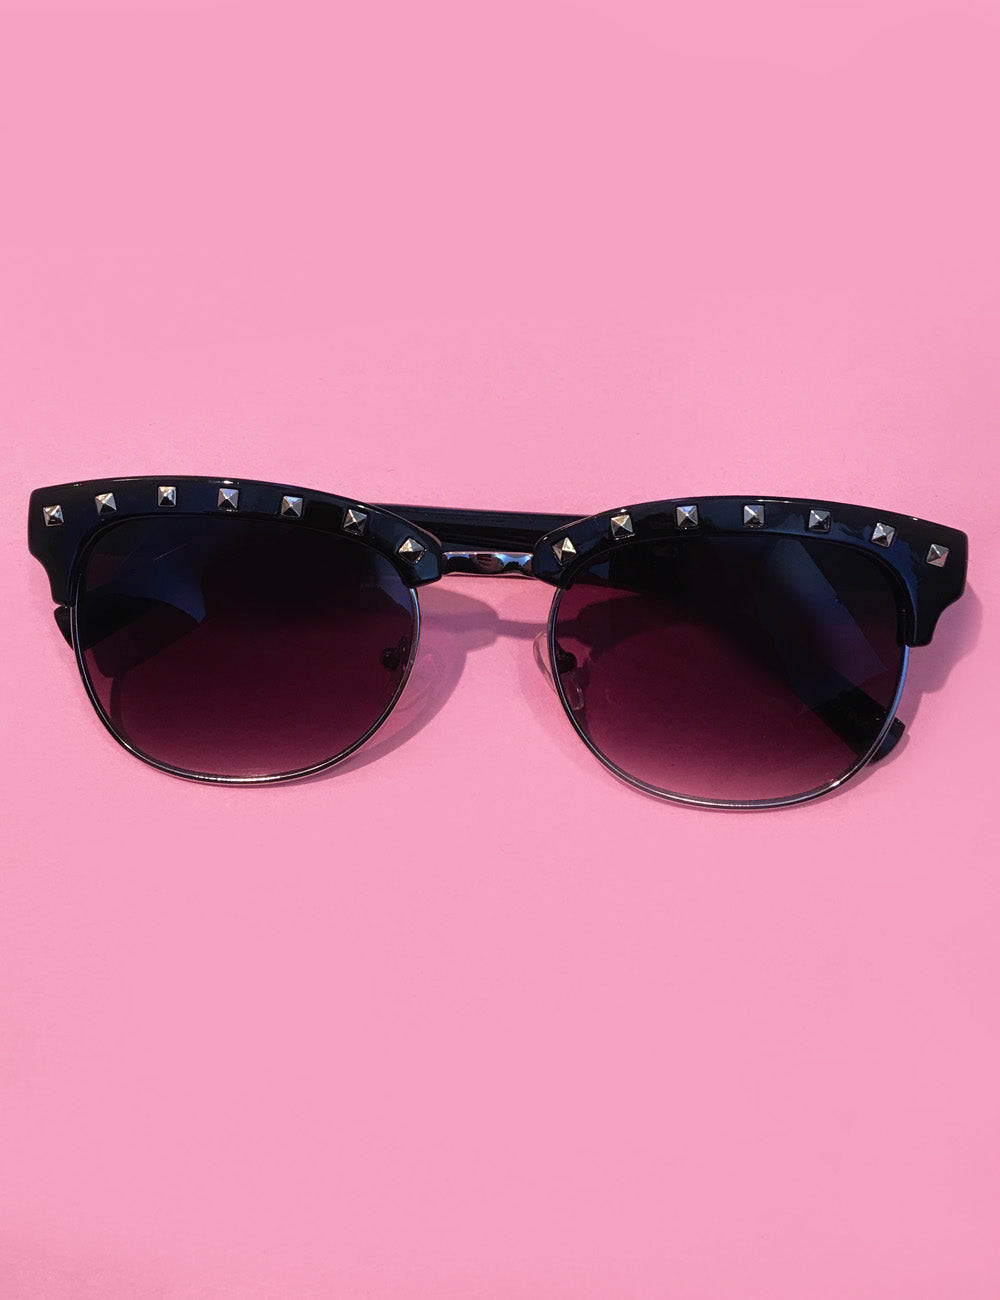 Retro Black & Silver Studded Horn Rimmed Sunglasses